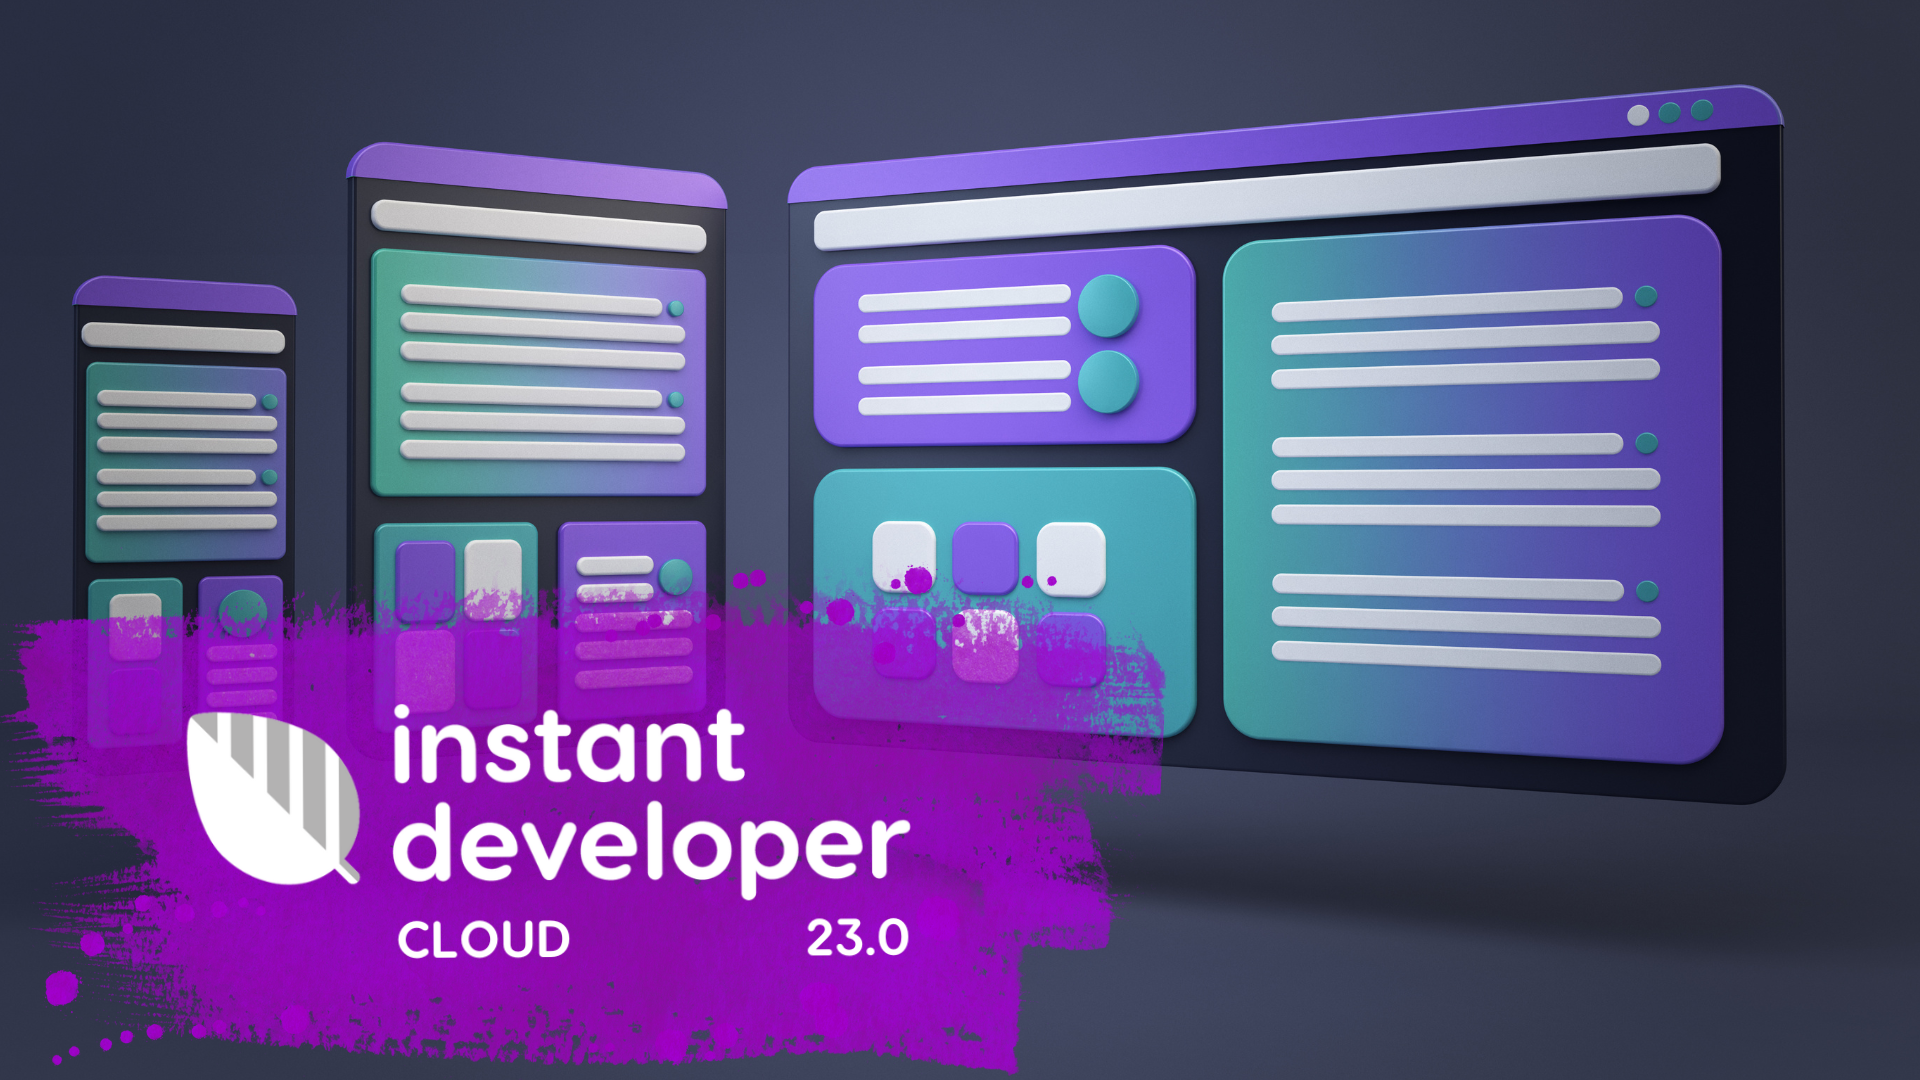 Instant Developer Cloud 23.0 for developing cloud back office software